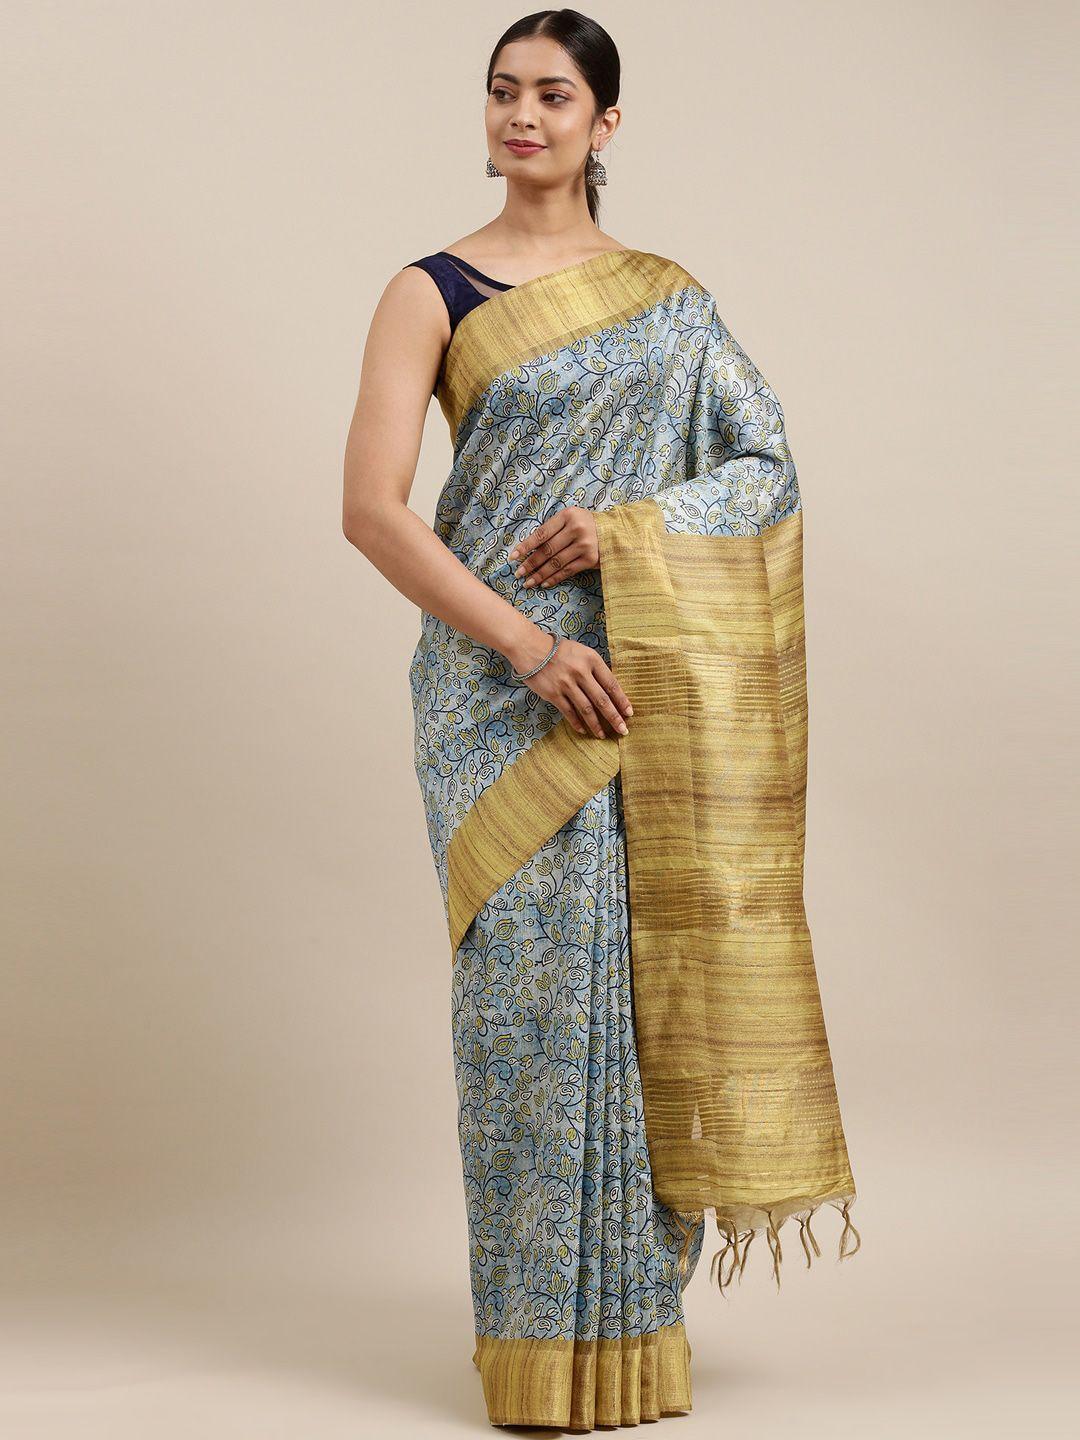 the-chennai-silks-blue-&-gold-toned-floral-printed-saree